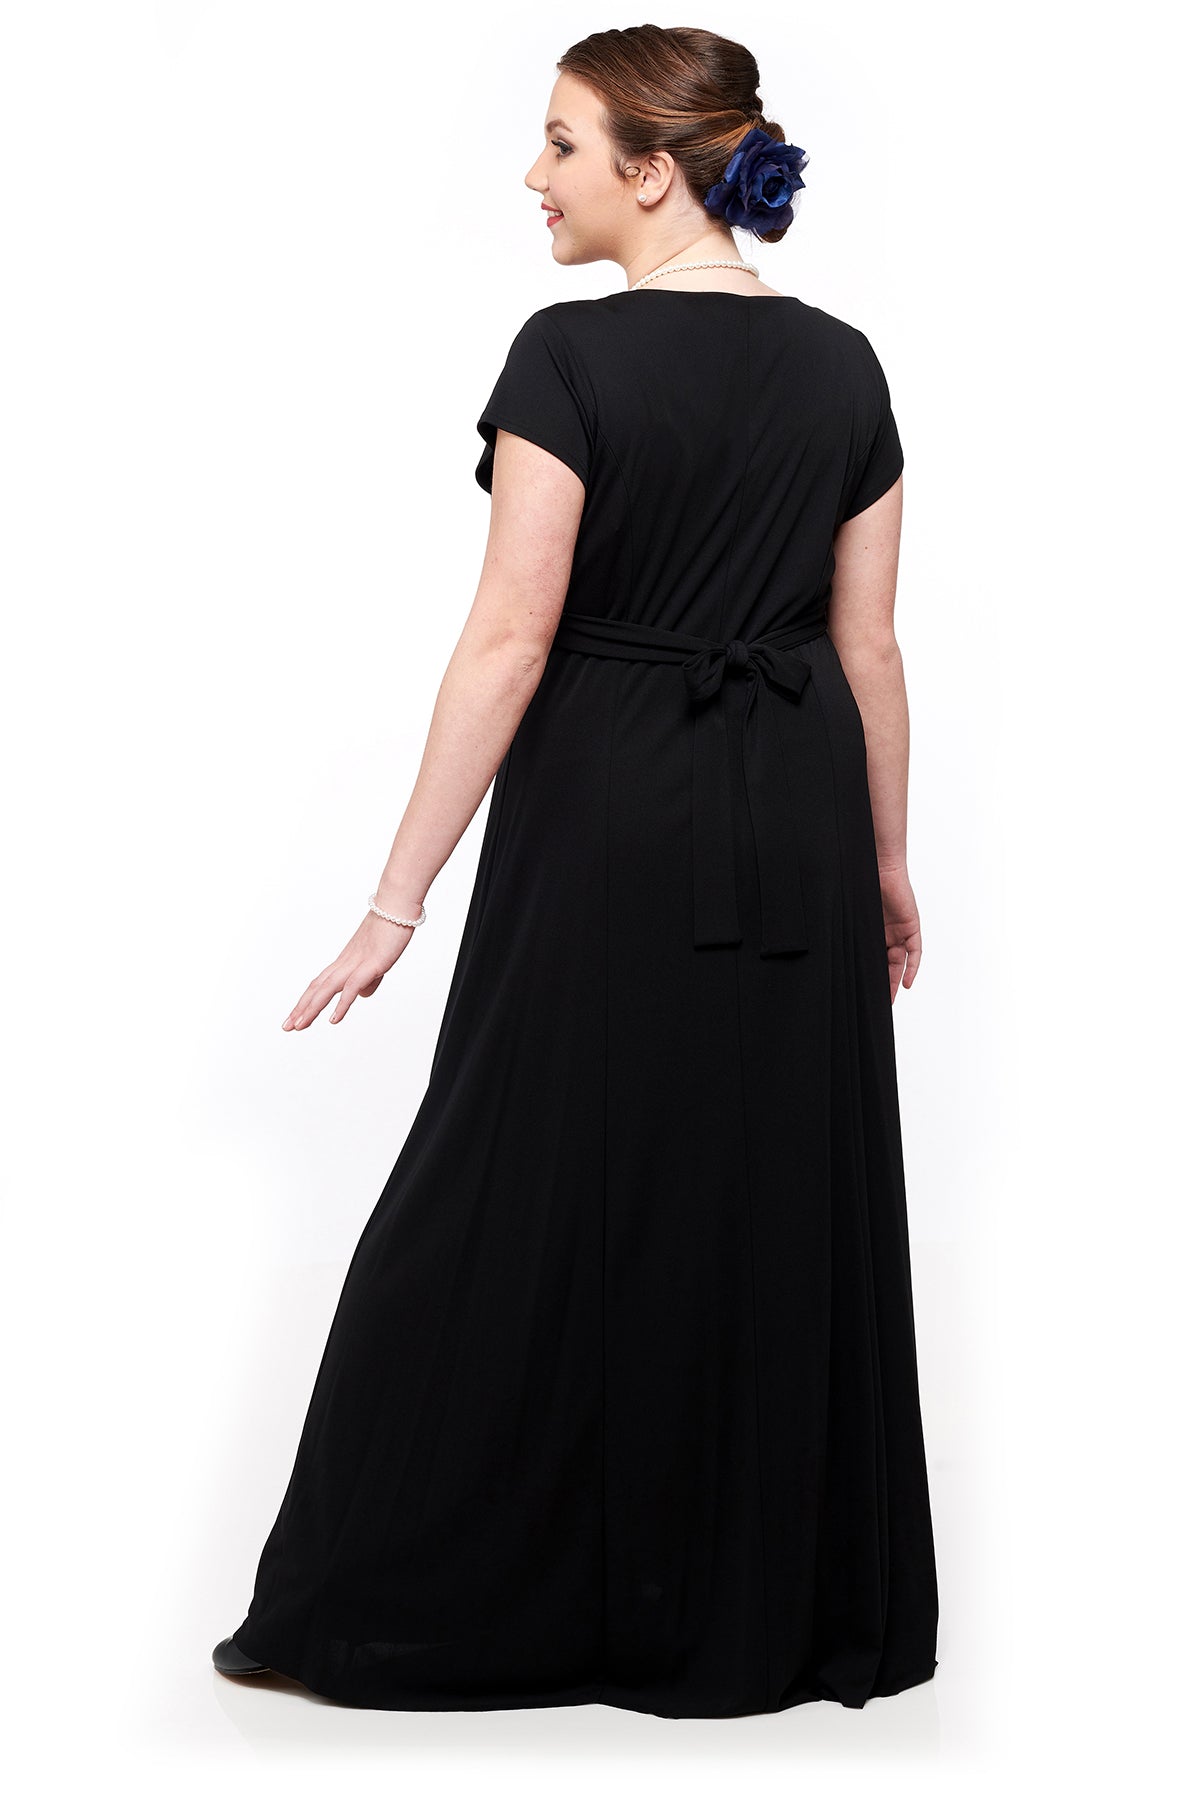 ANGELINA (Style #115) - Scoop Neck, Short Sleeve Dress